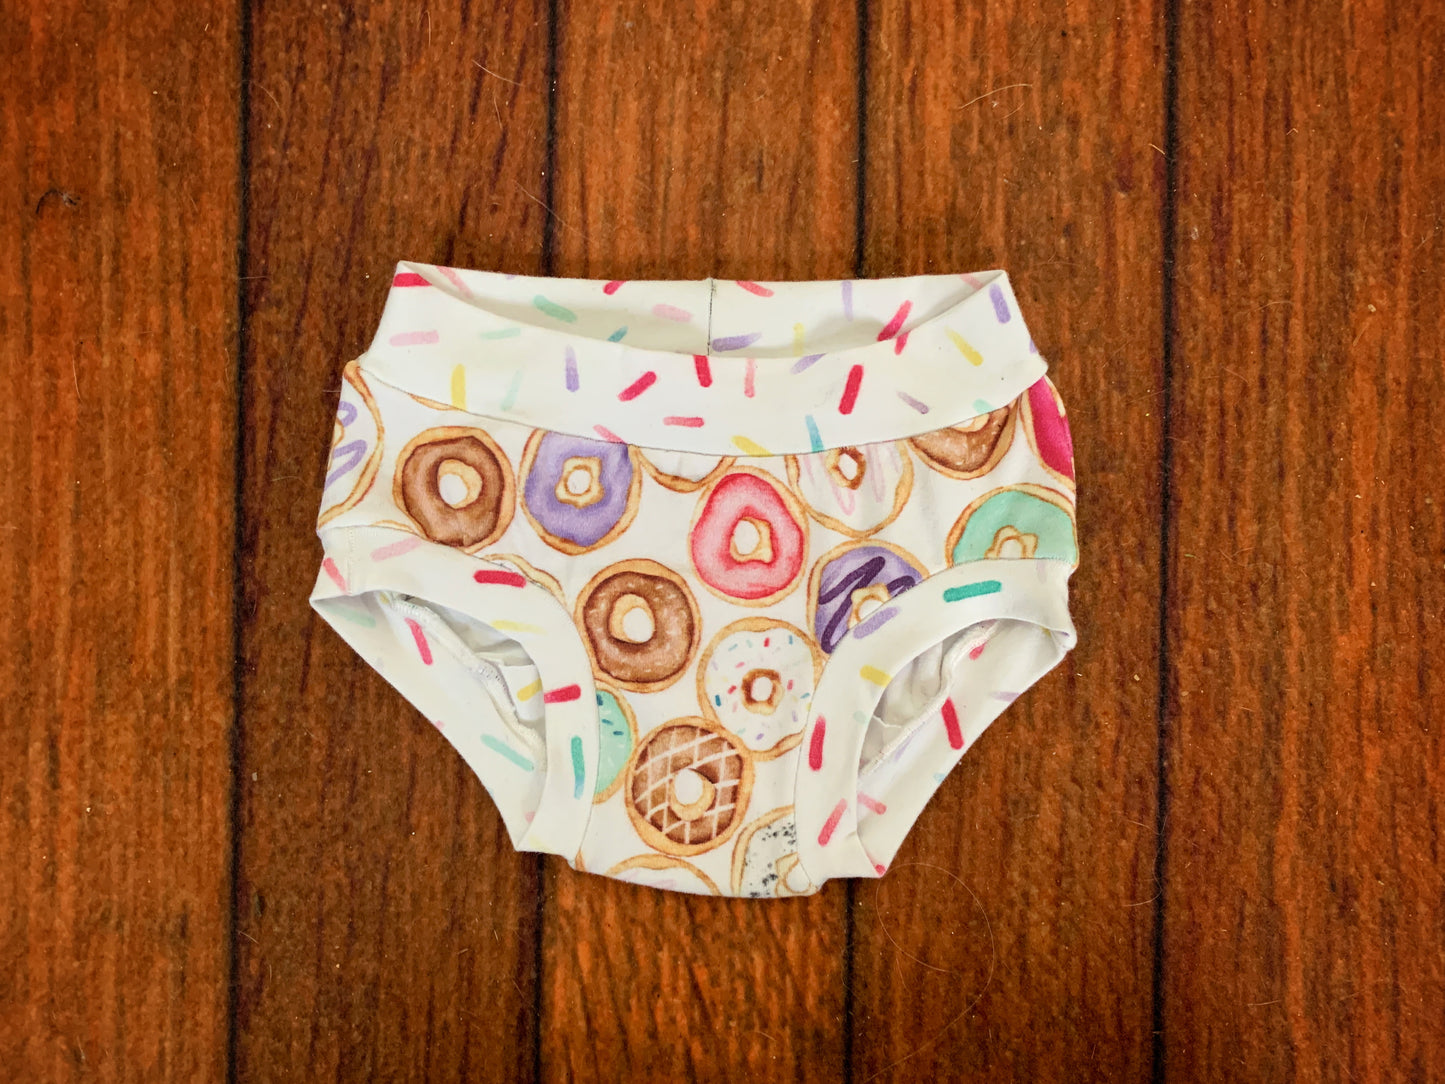 KIDS SIZE undies RockerByeBooties - PDF - Digital Pattern File for garment sewing underwear diaper cover training underwear menstruation